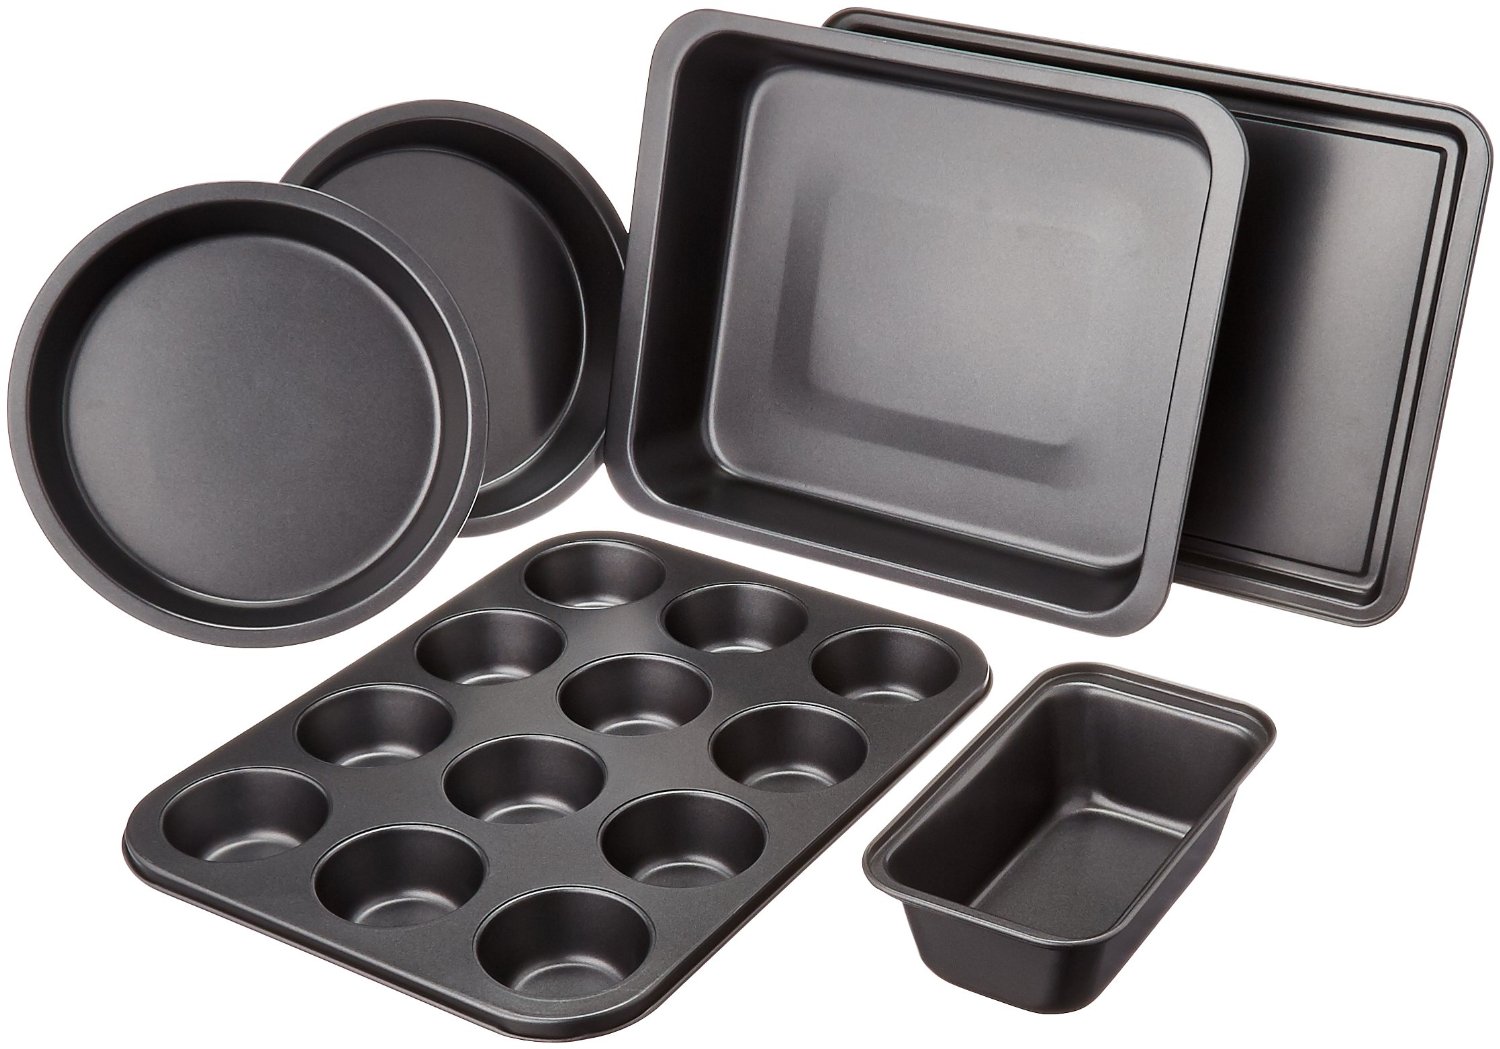 Bakeware Set Reviews: AmazonBasics, Calphalon and Pyrex Glass Bakeware with Food Storage 1